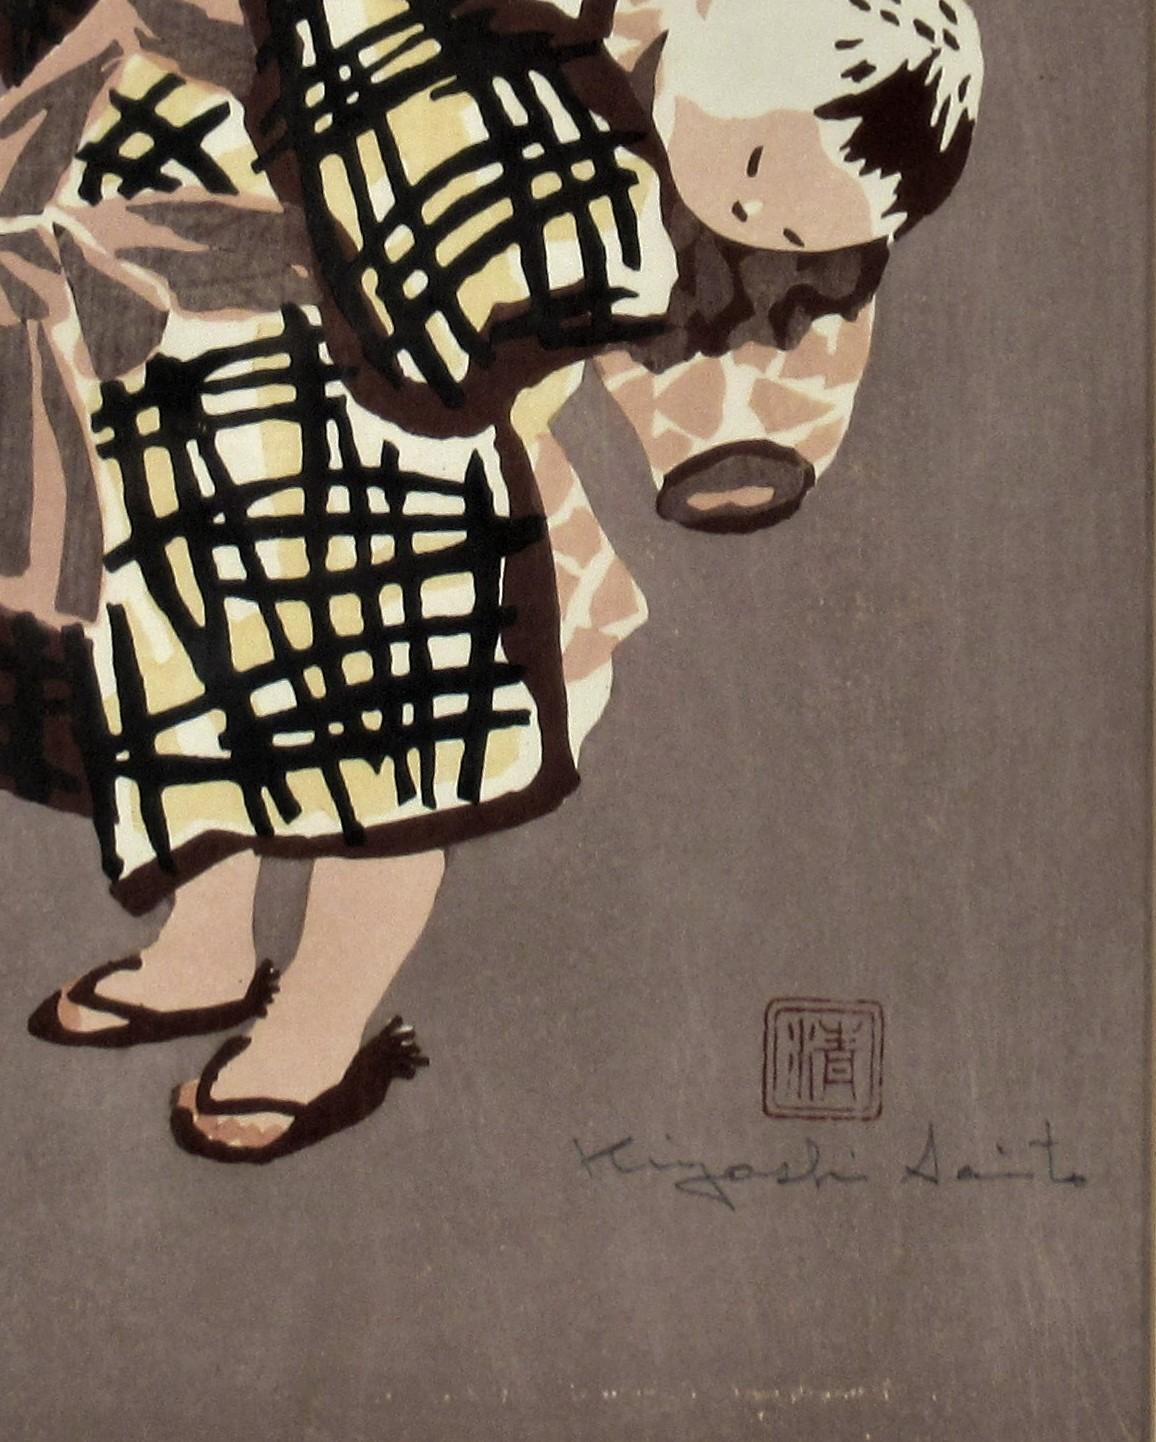 kiyoshi saitō artwork